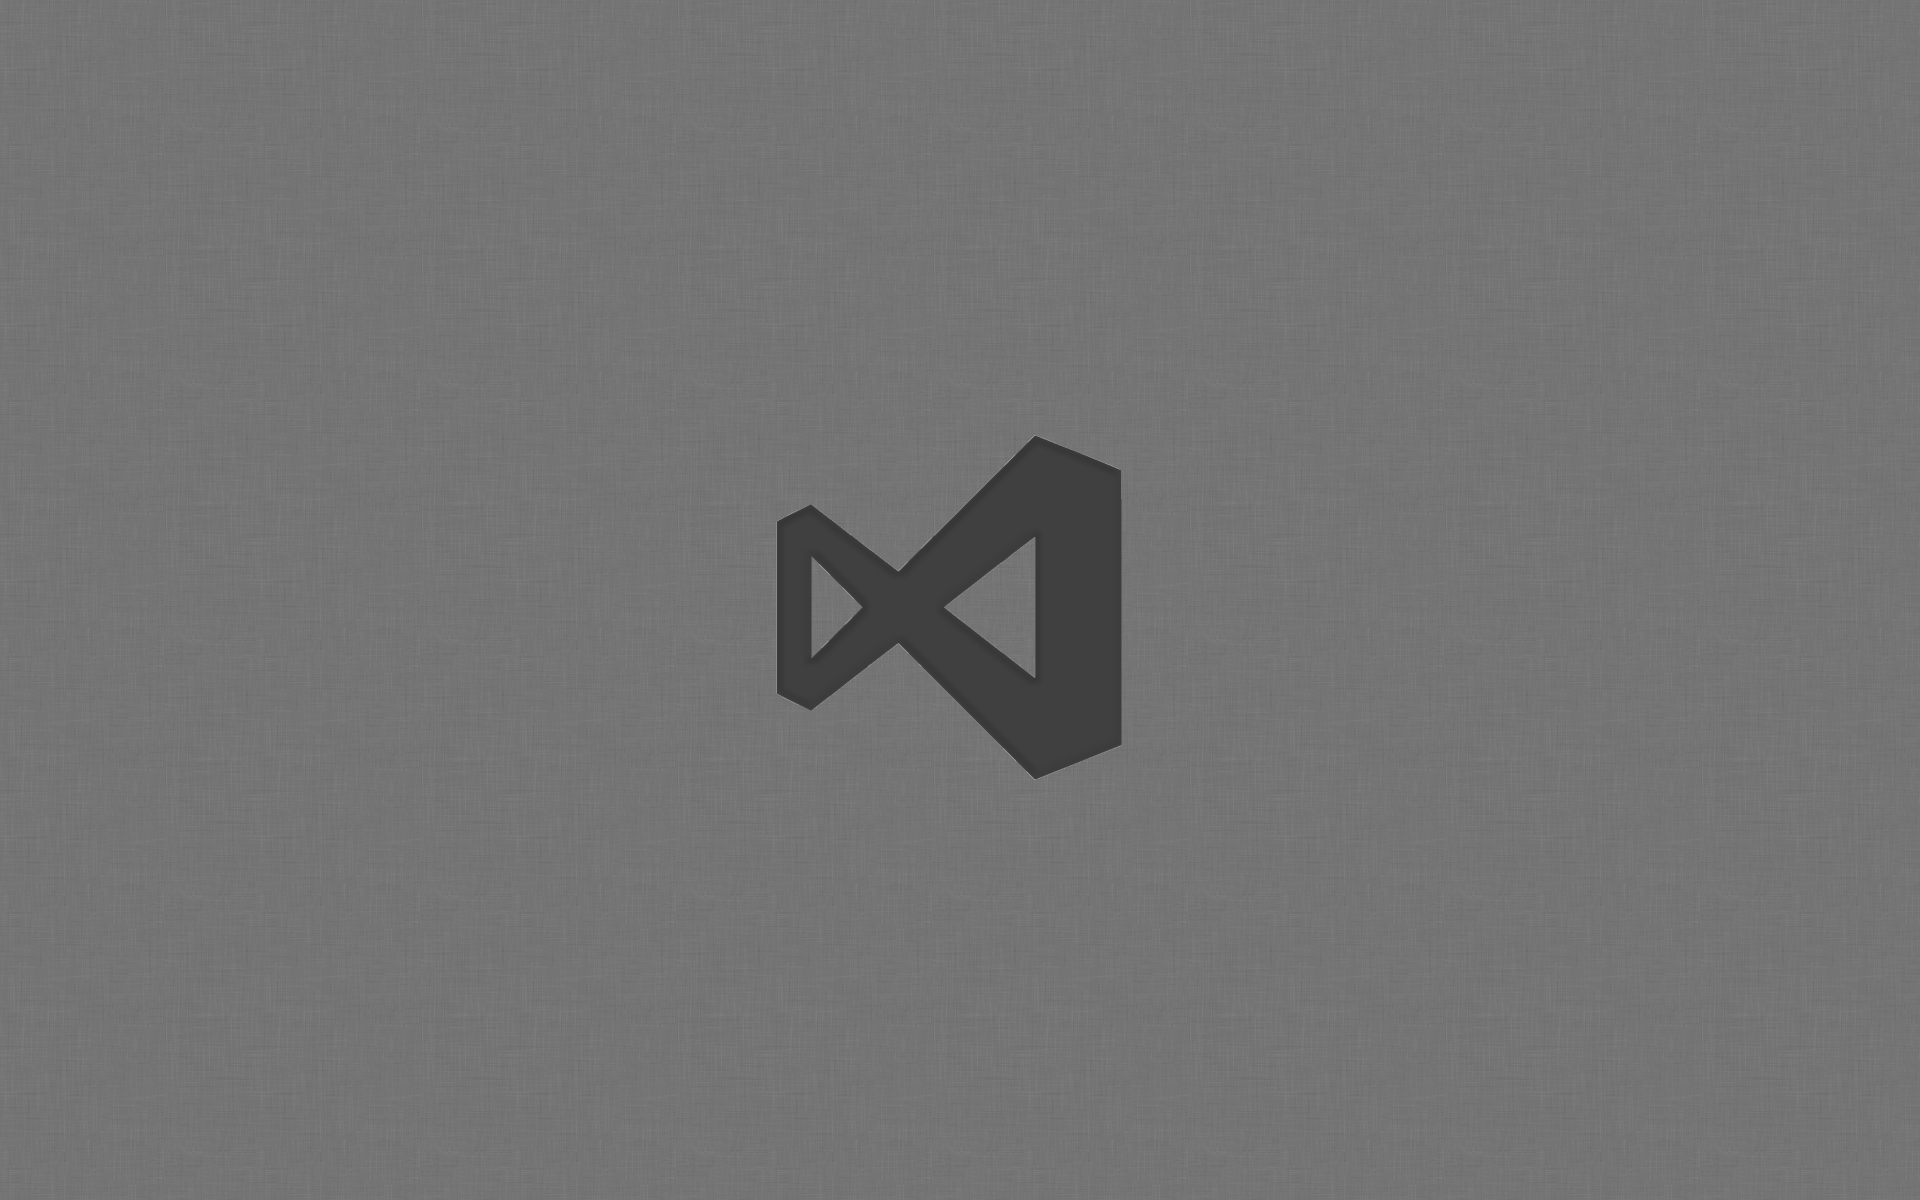 Visual Studio Wallpaper. Blur Studio Wallpaper, Visual Studio Wallpaper and Studio Background Scenery